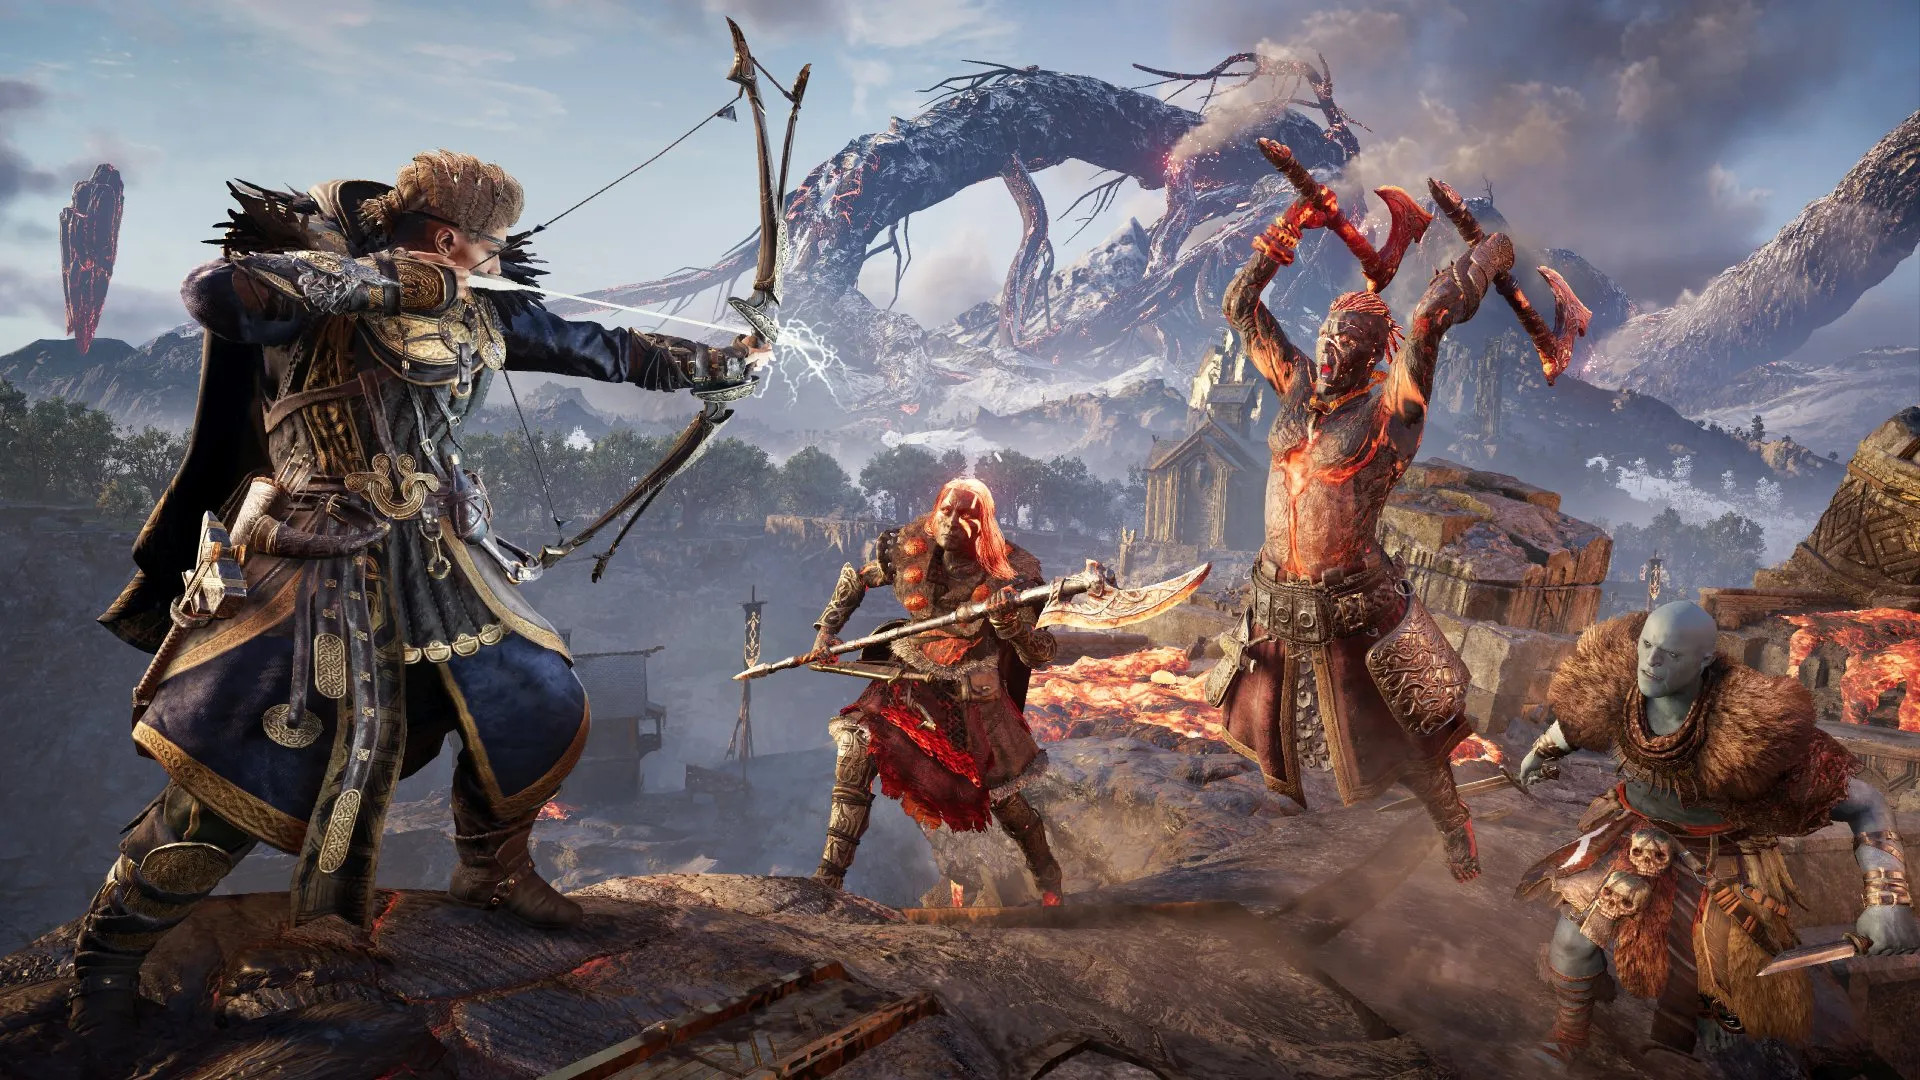 Havi battles fiery enemies in Assassin's Creed Valhalla: Dawn of Ragnarok